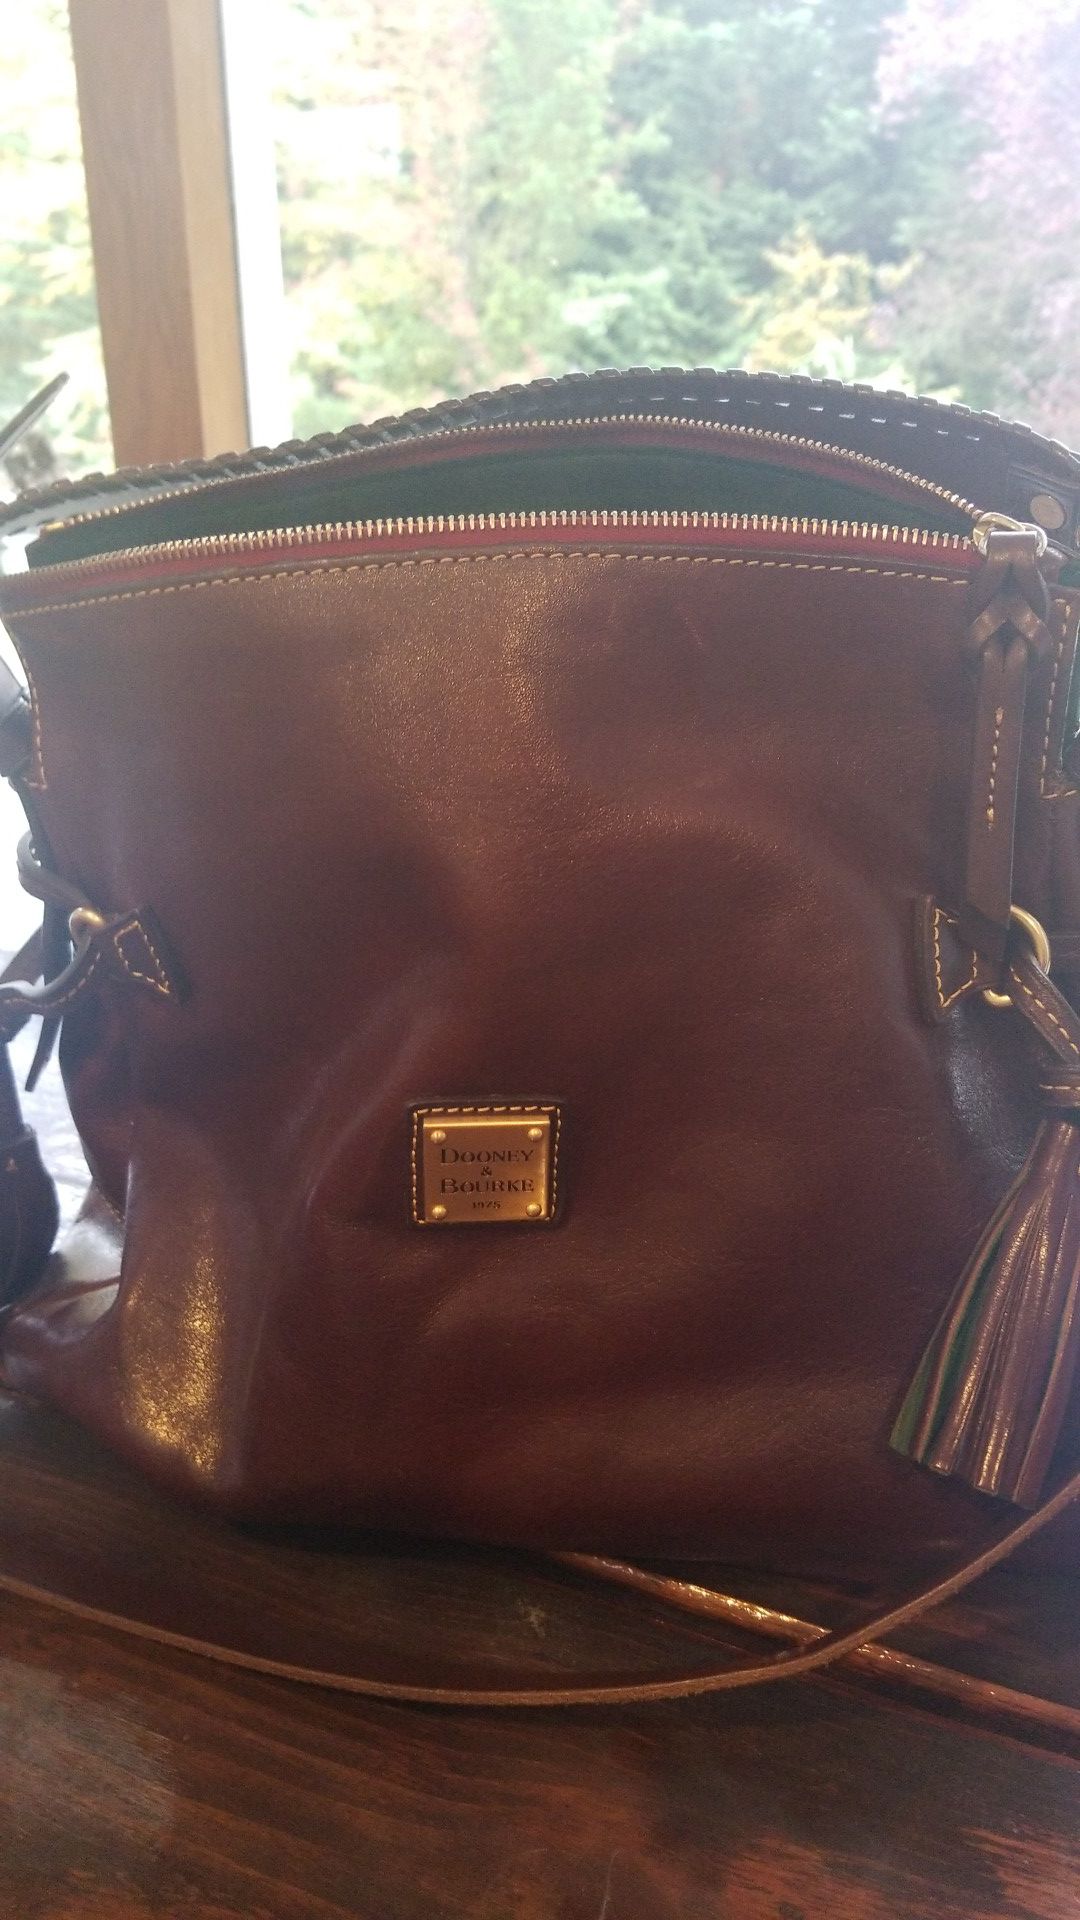 Dooney & Bourke premium leather purse